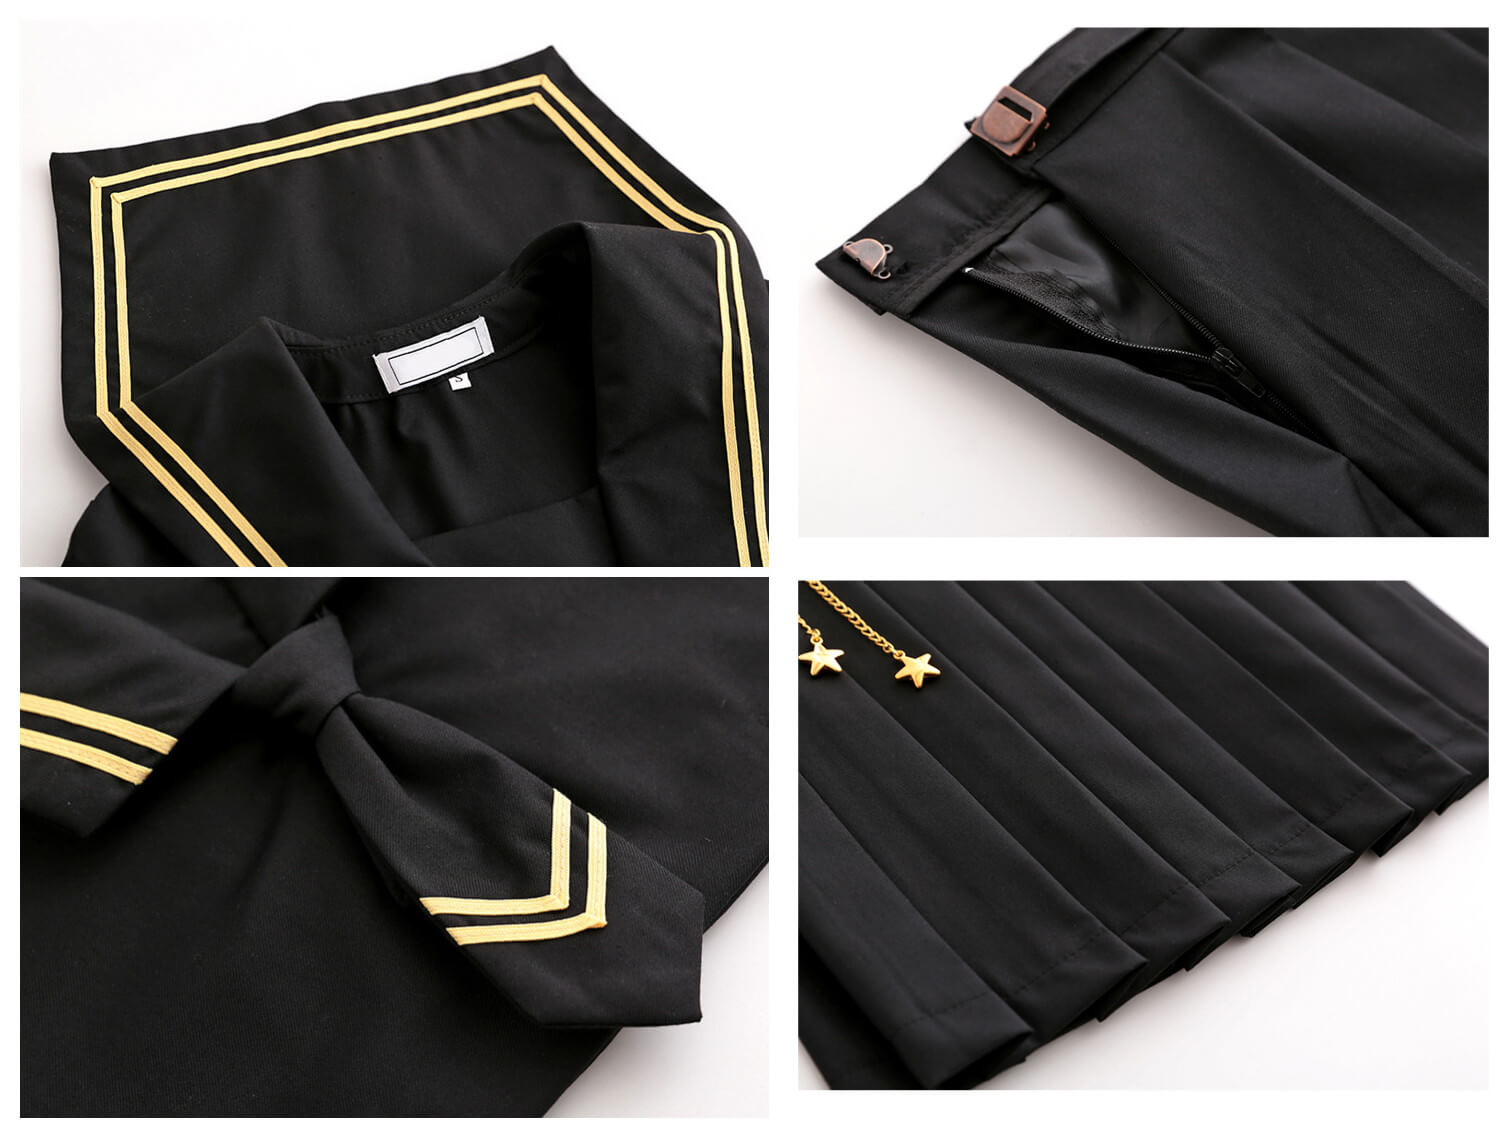 cutiekill-shooting-star-japanese-uniforms-seifuku-outfit-set-c00808